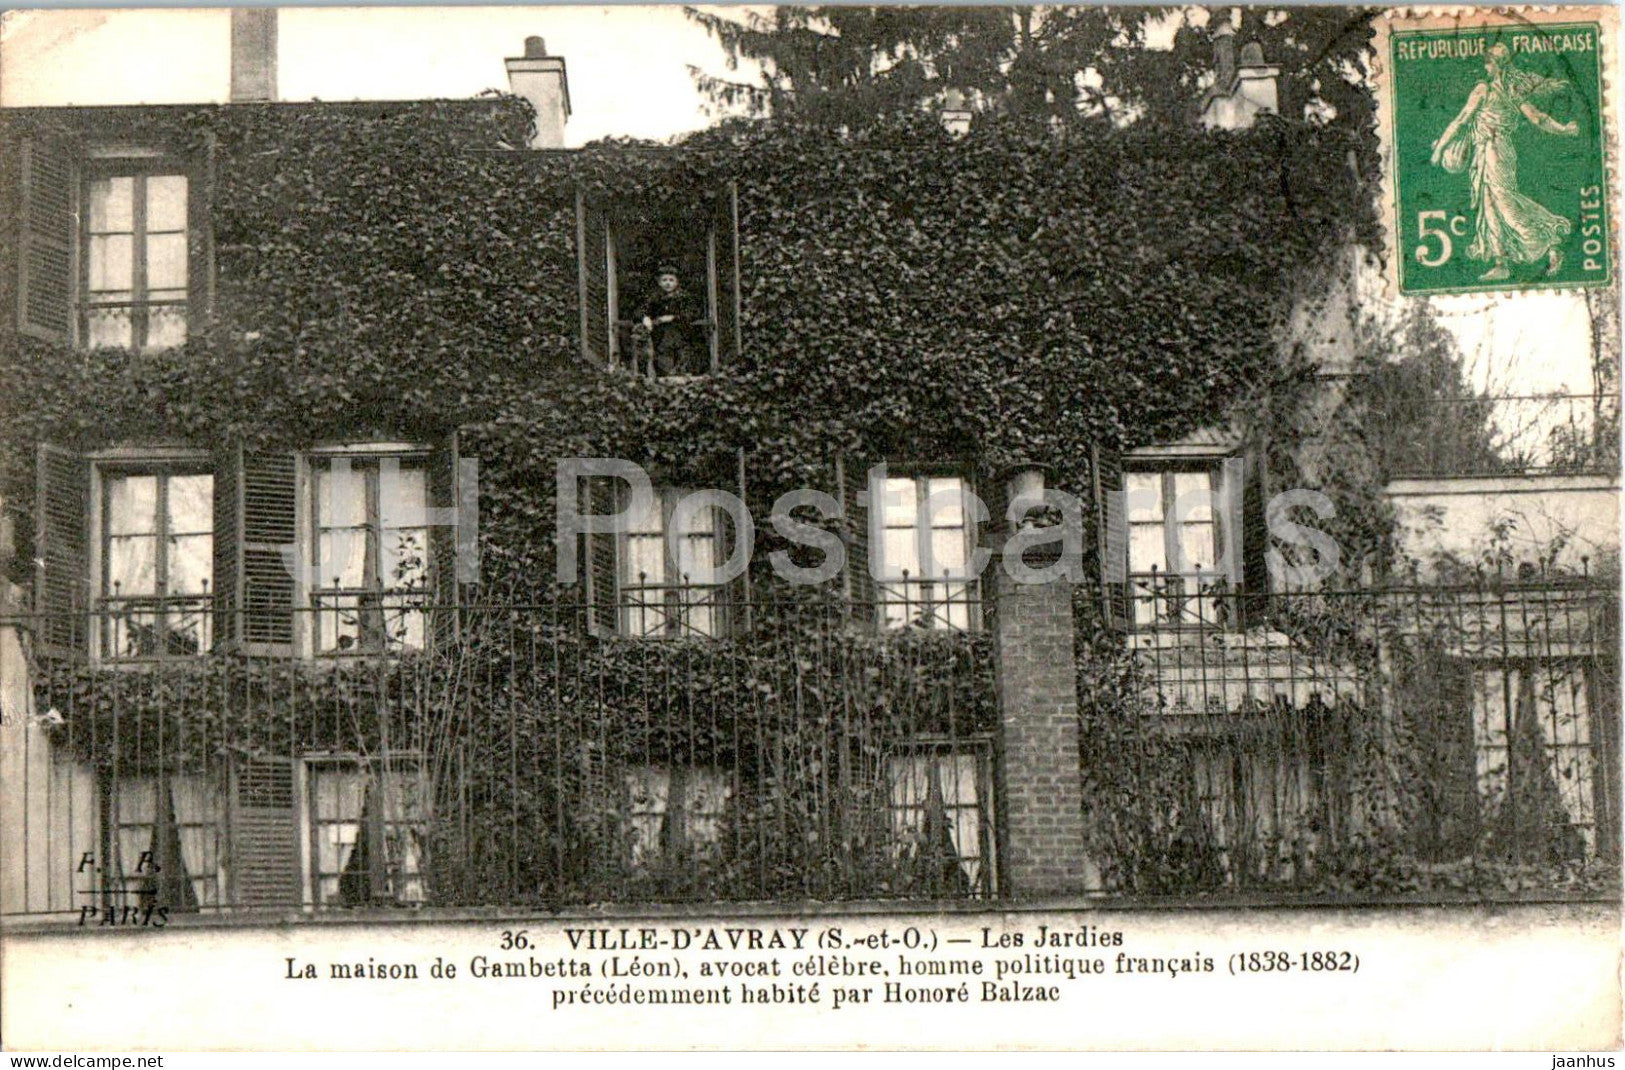 Ville D'Avray - Les Jardies - Honore de Balzac - 36 - old postcard - 1916 - France - used - JH Postcards